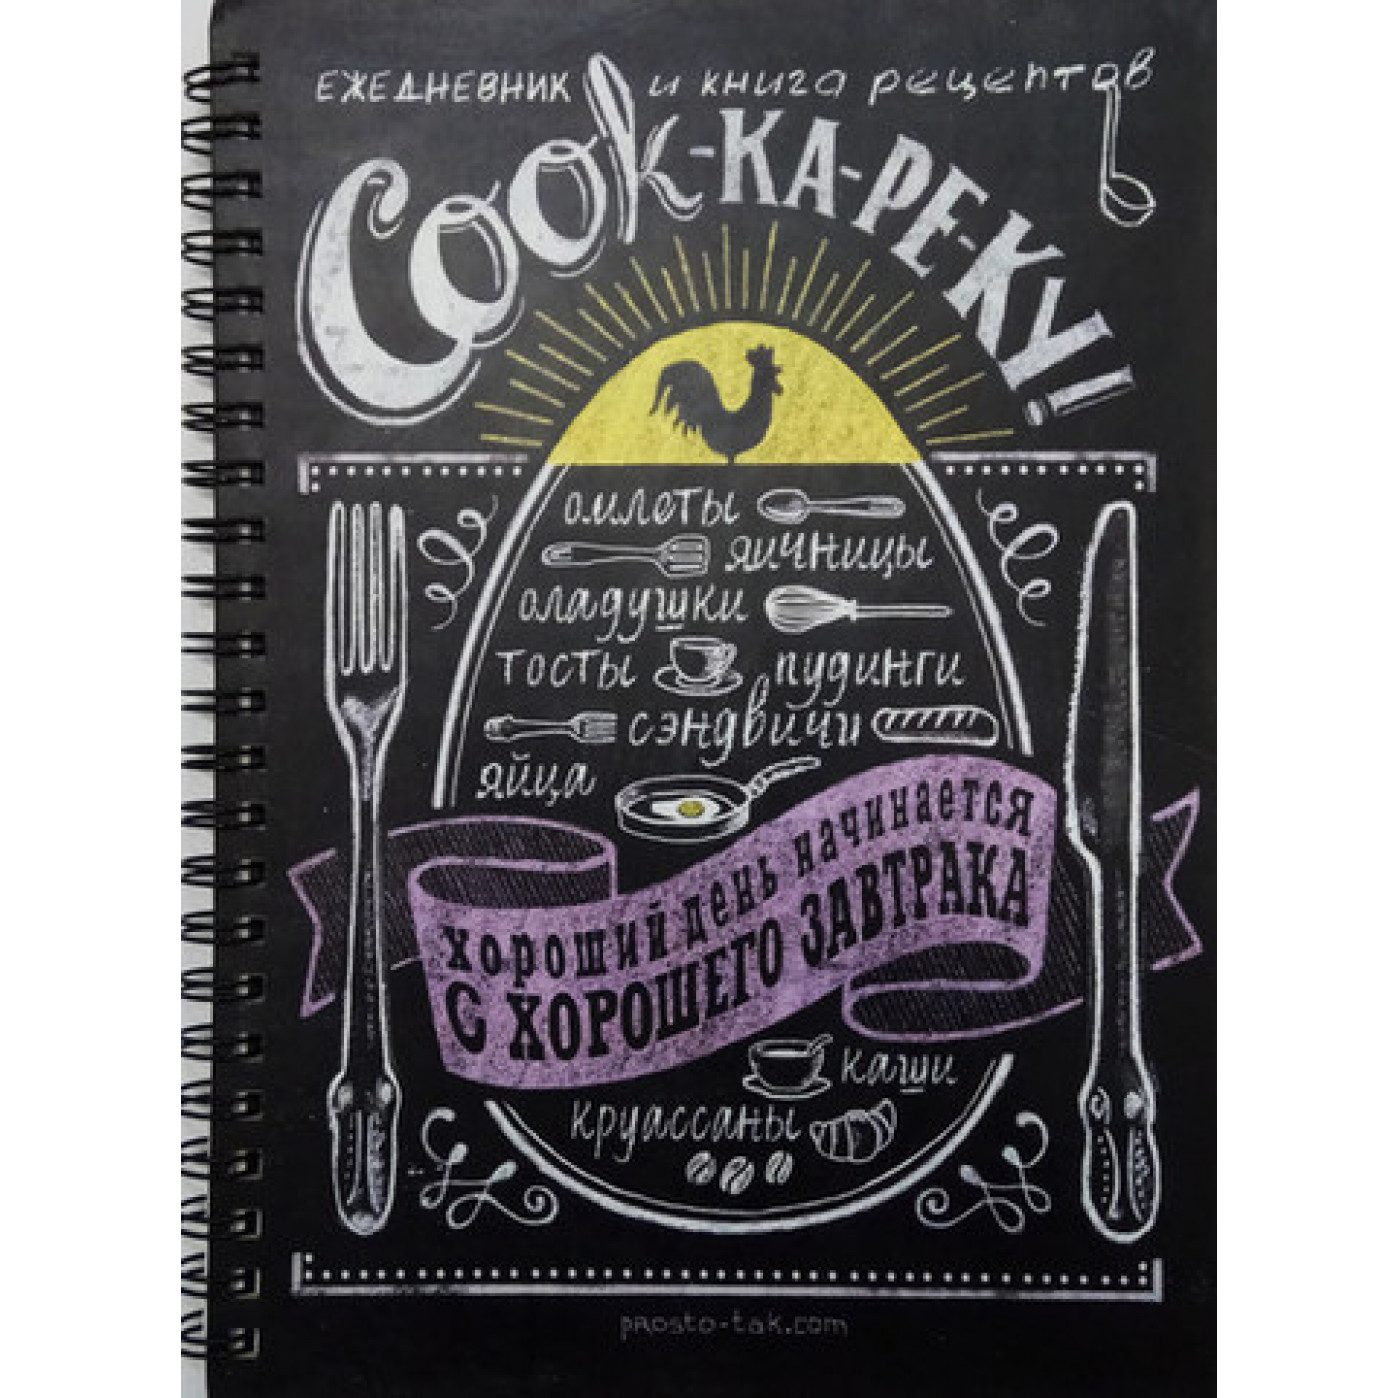 Ежедневник-книга рецептов Cookкареку